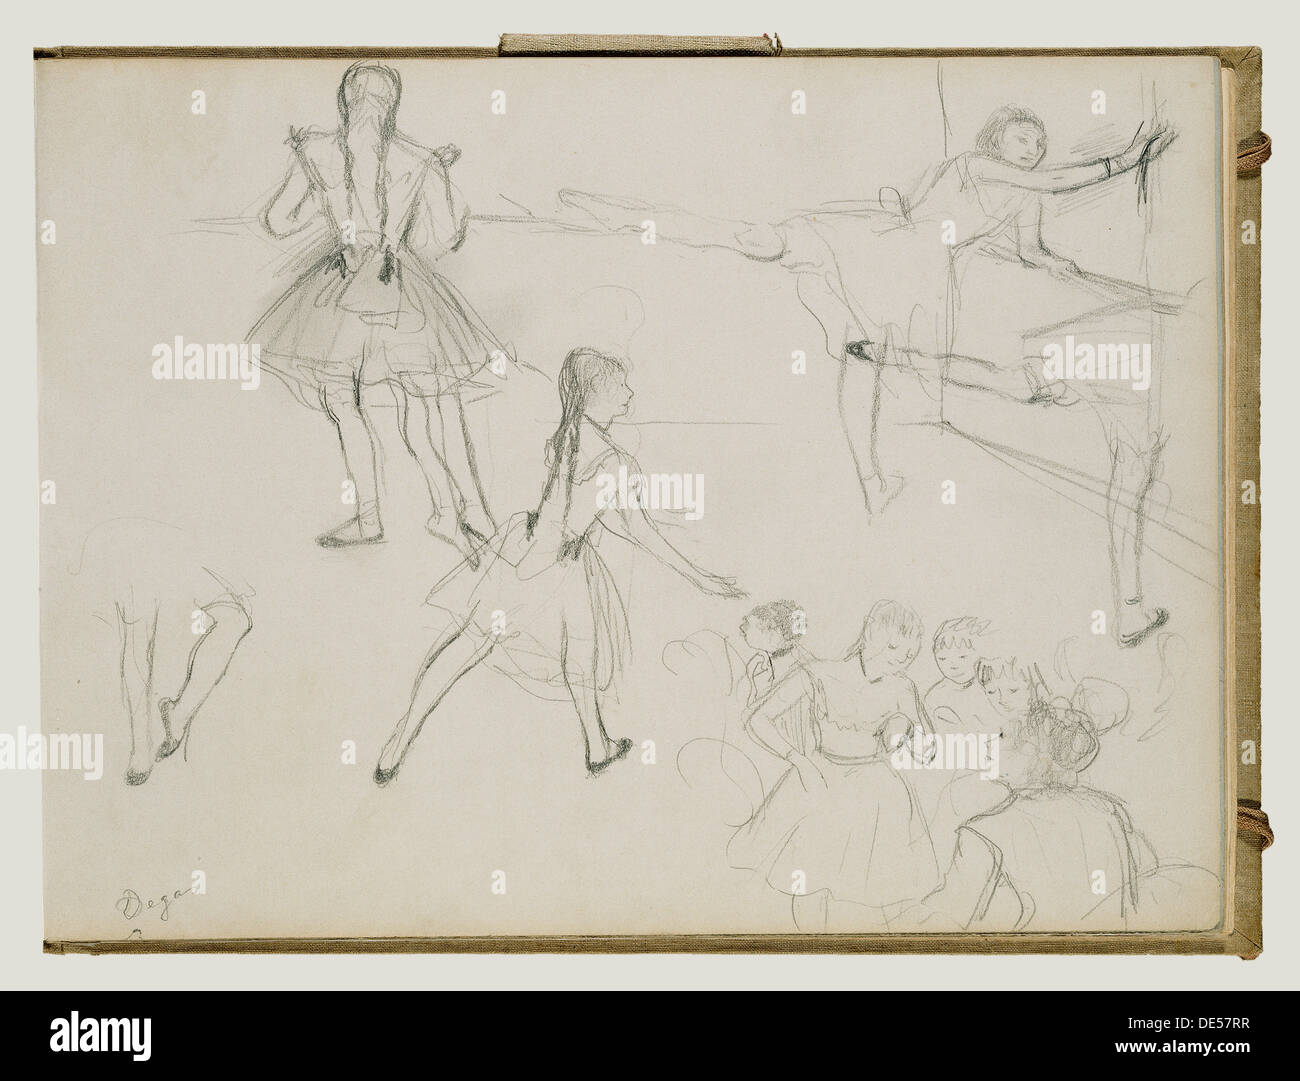 Sold at Auction: After Edgar Degas, Sketch of a Dancer's Back